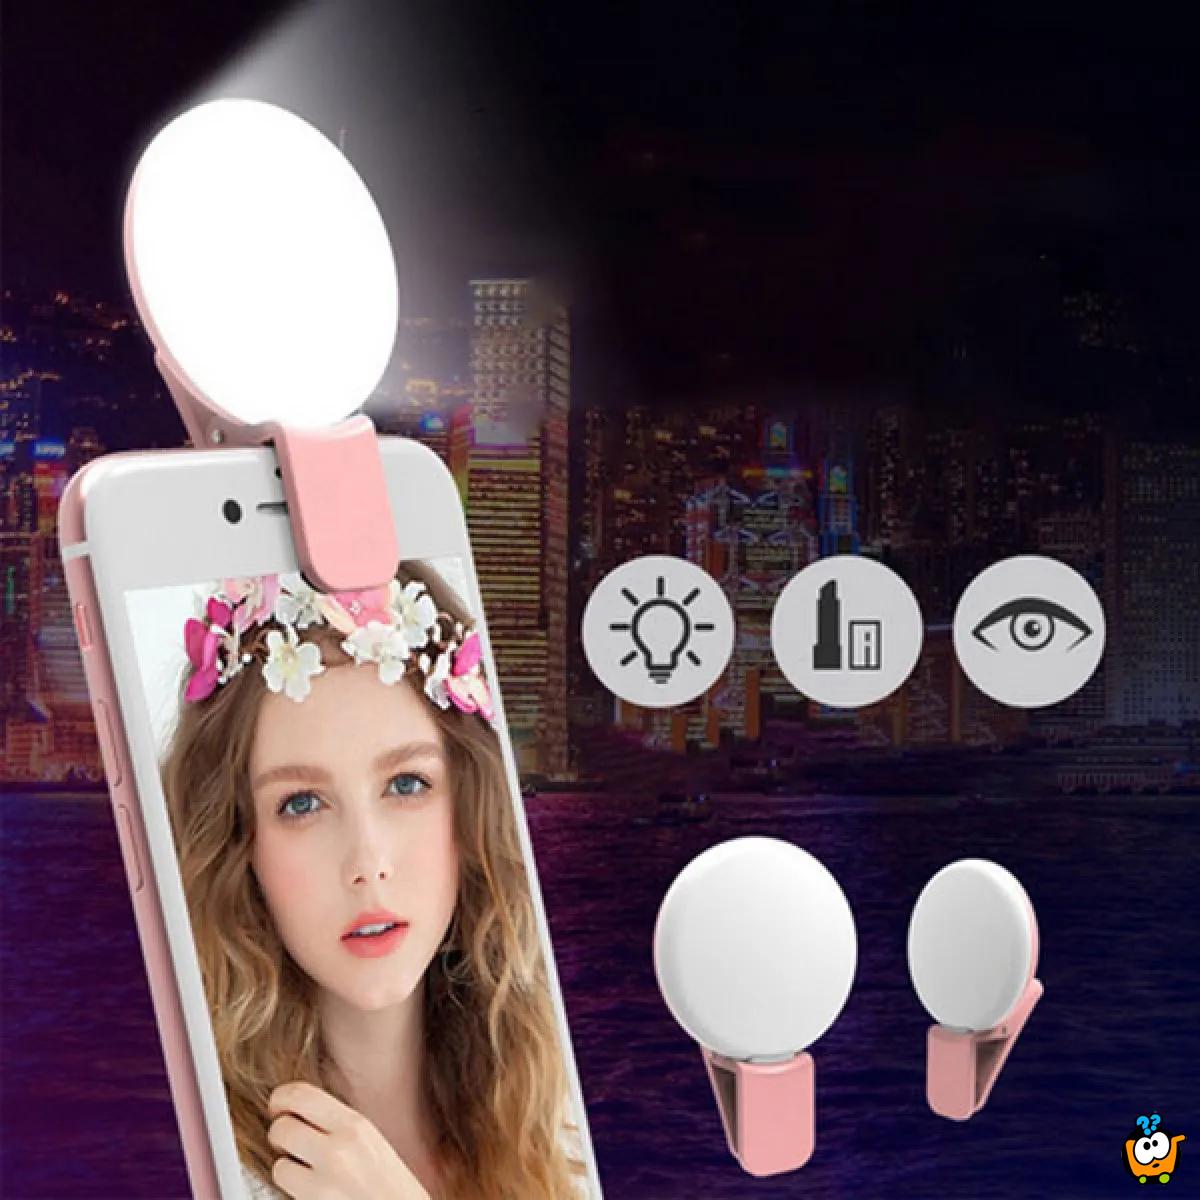 Phone LED lamp - Led Lampa za savršen selfi